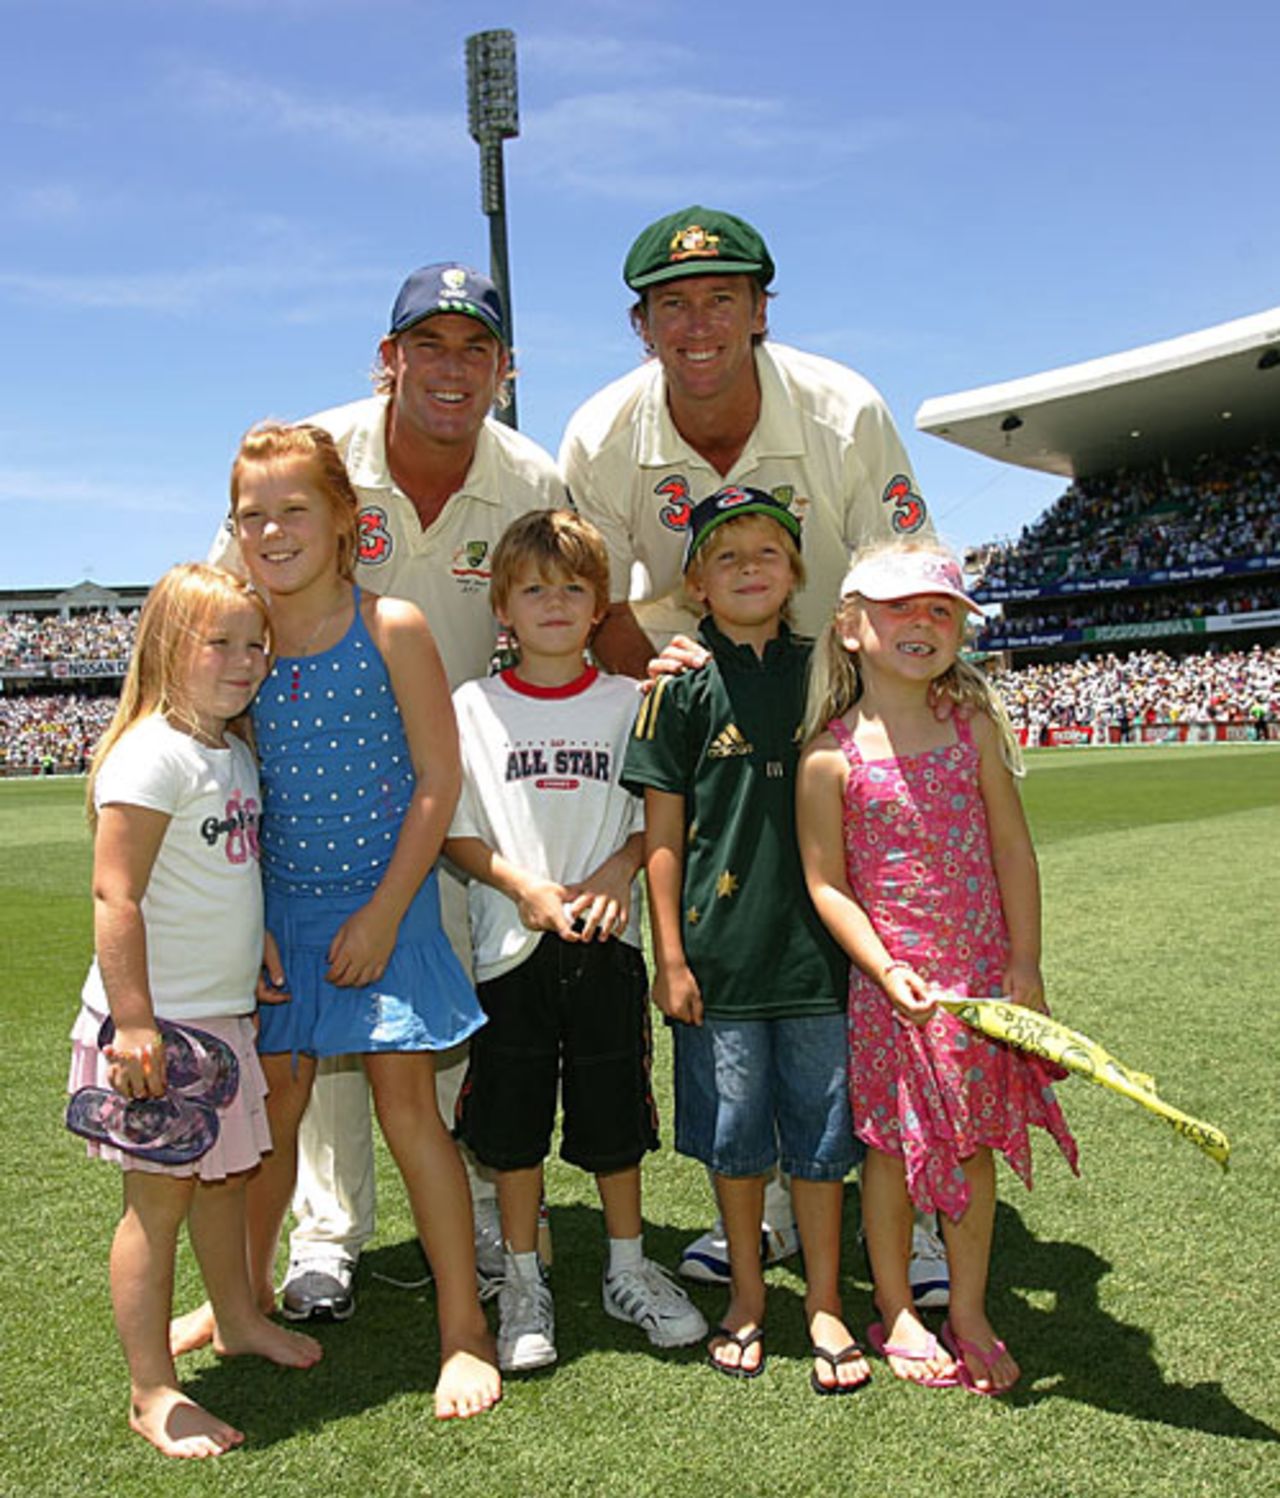 Shane Warne and Glenn McGrath pose with their children as Australia regain the Ashes, Australia v England, 5th Test, Sydney, January 5, 2007